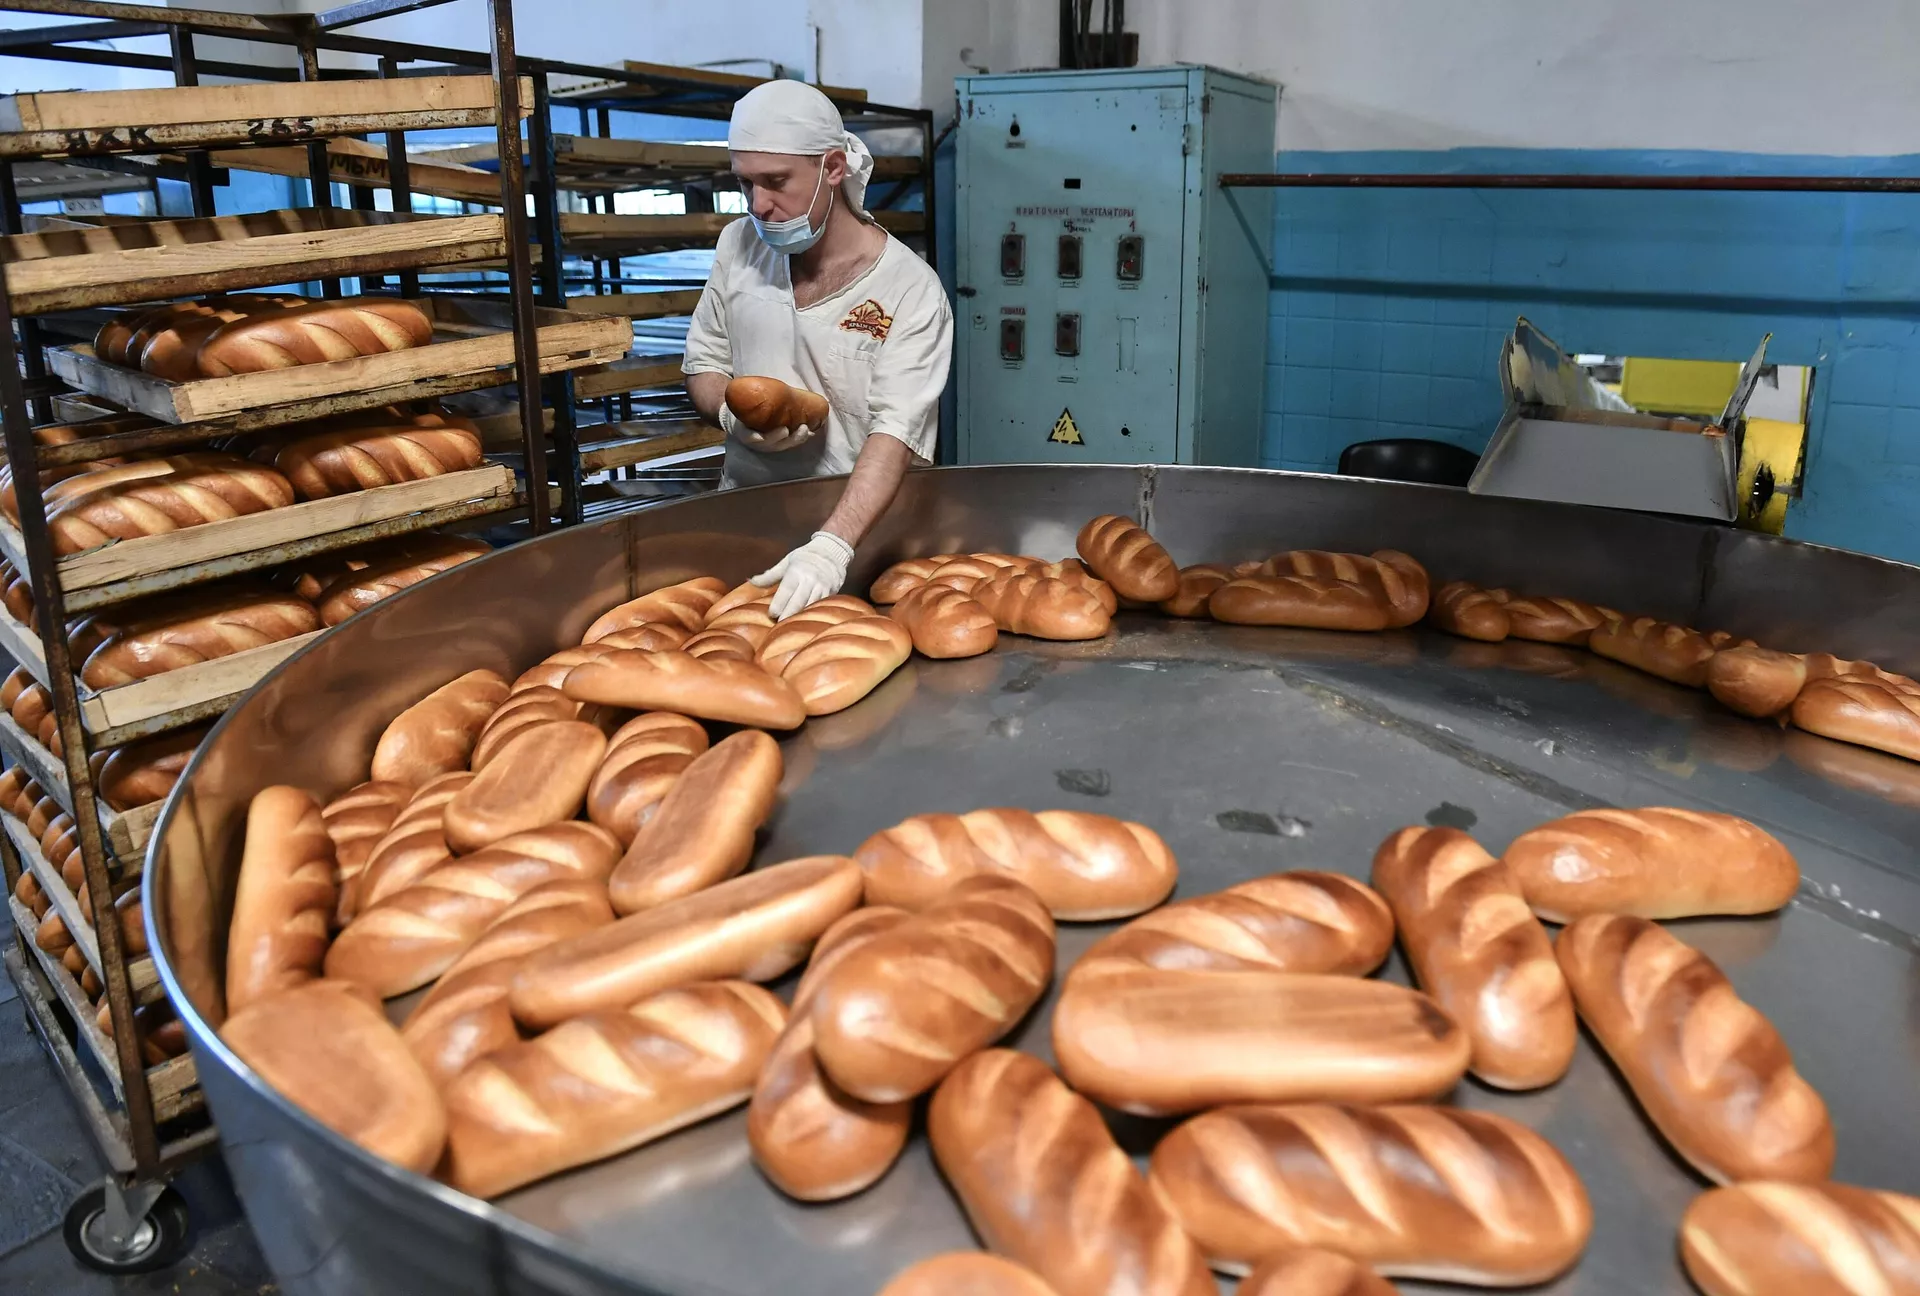 Производство хлеба на заводе в Симферополе  - РИА Новости, 1920, 23.03.2021